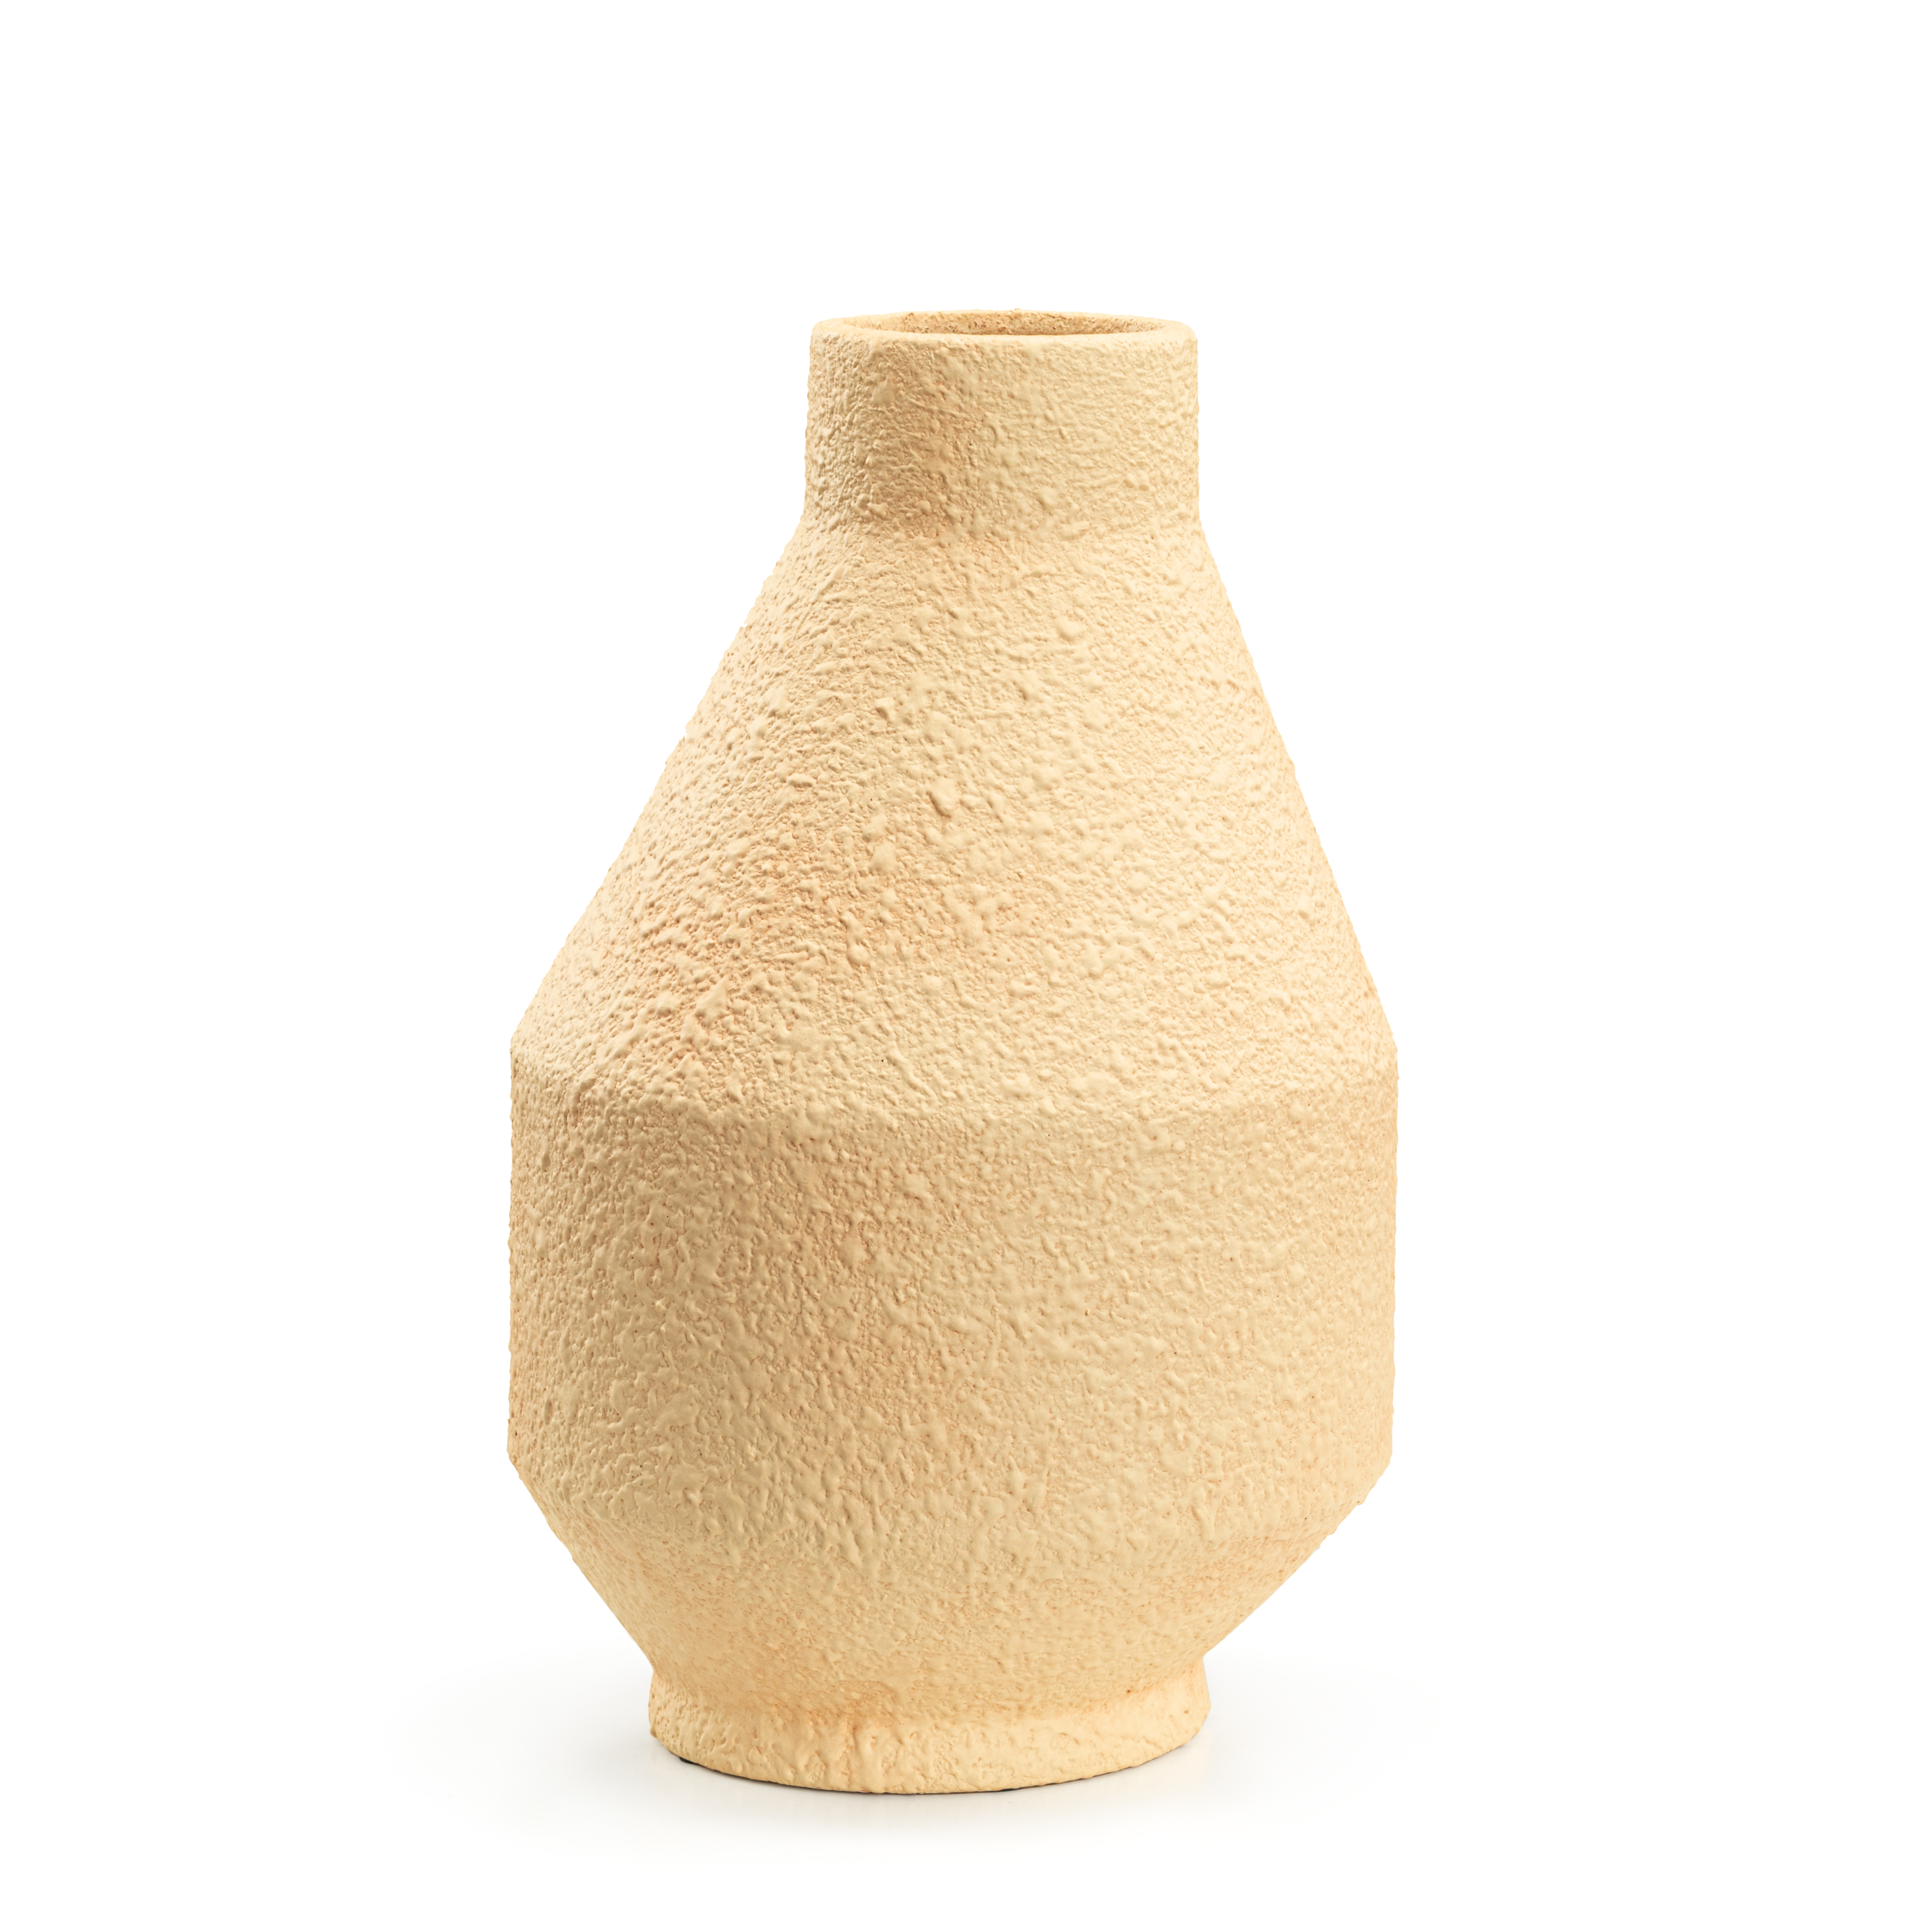 Willow Decorative Sculptural Sand Tone Rustic Wabi Sabi Ceramic Vase - Sand